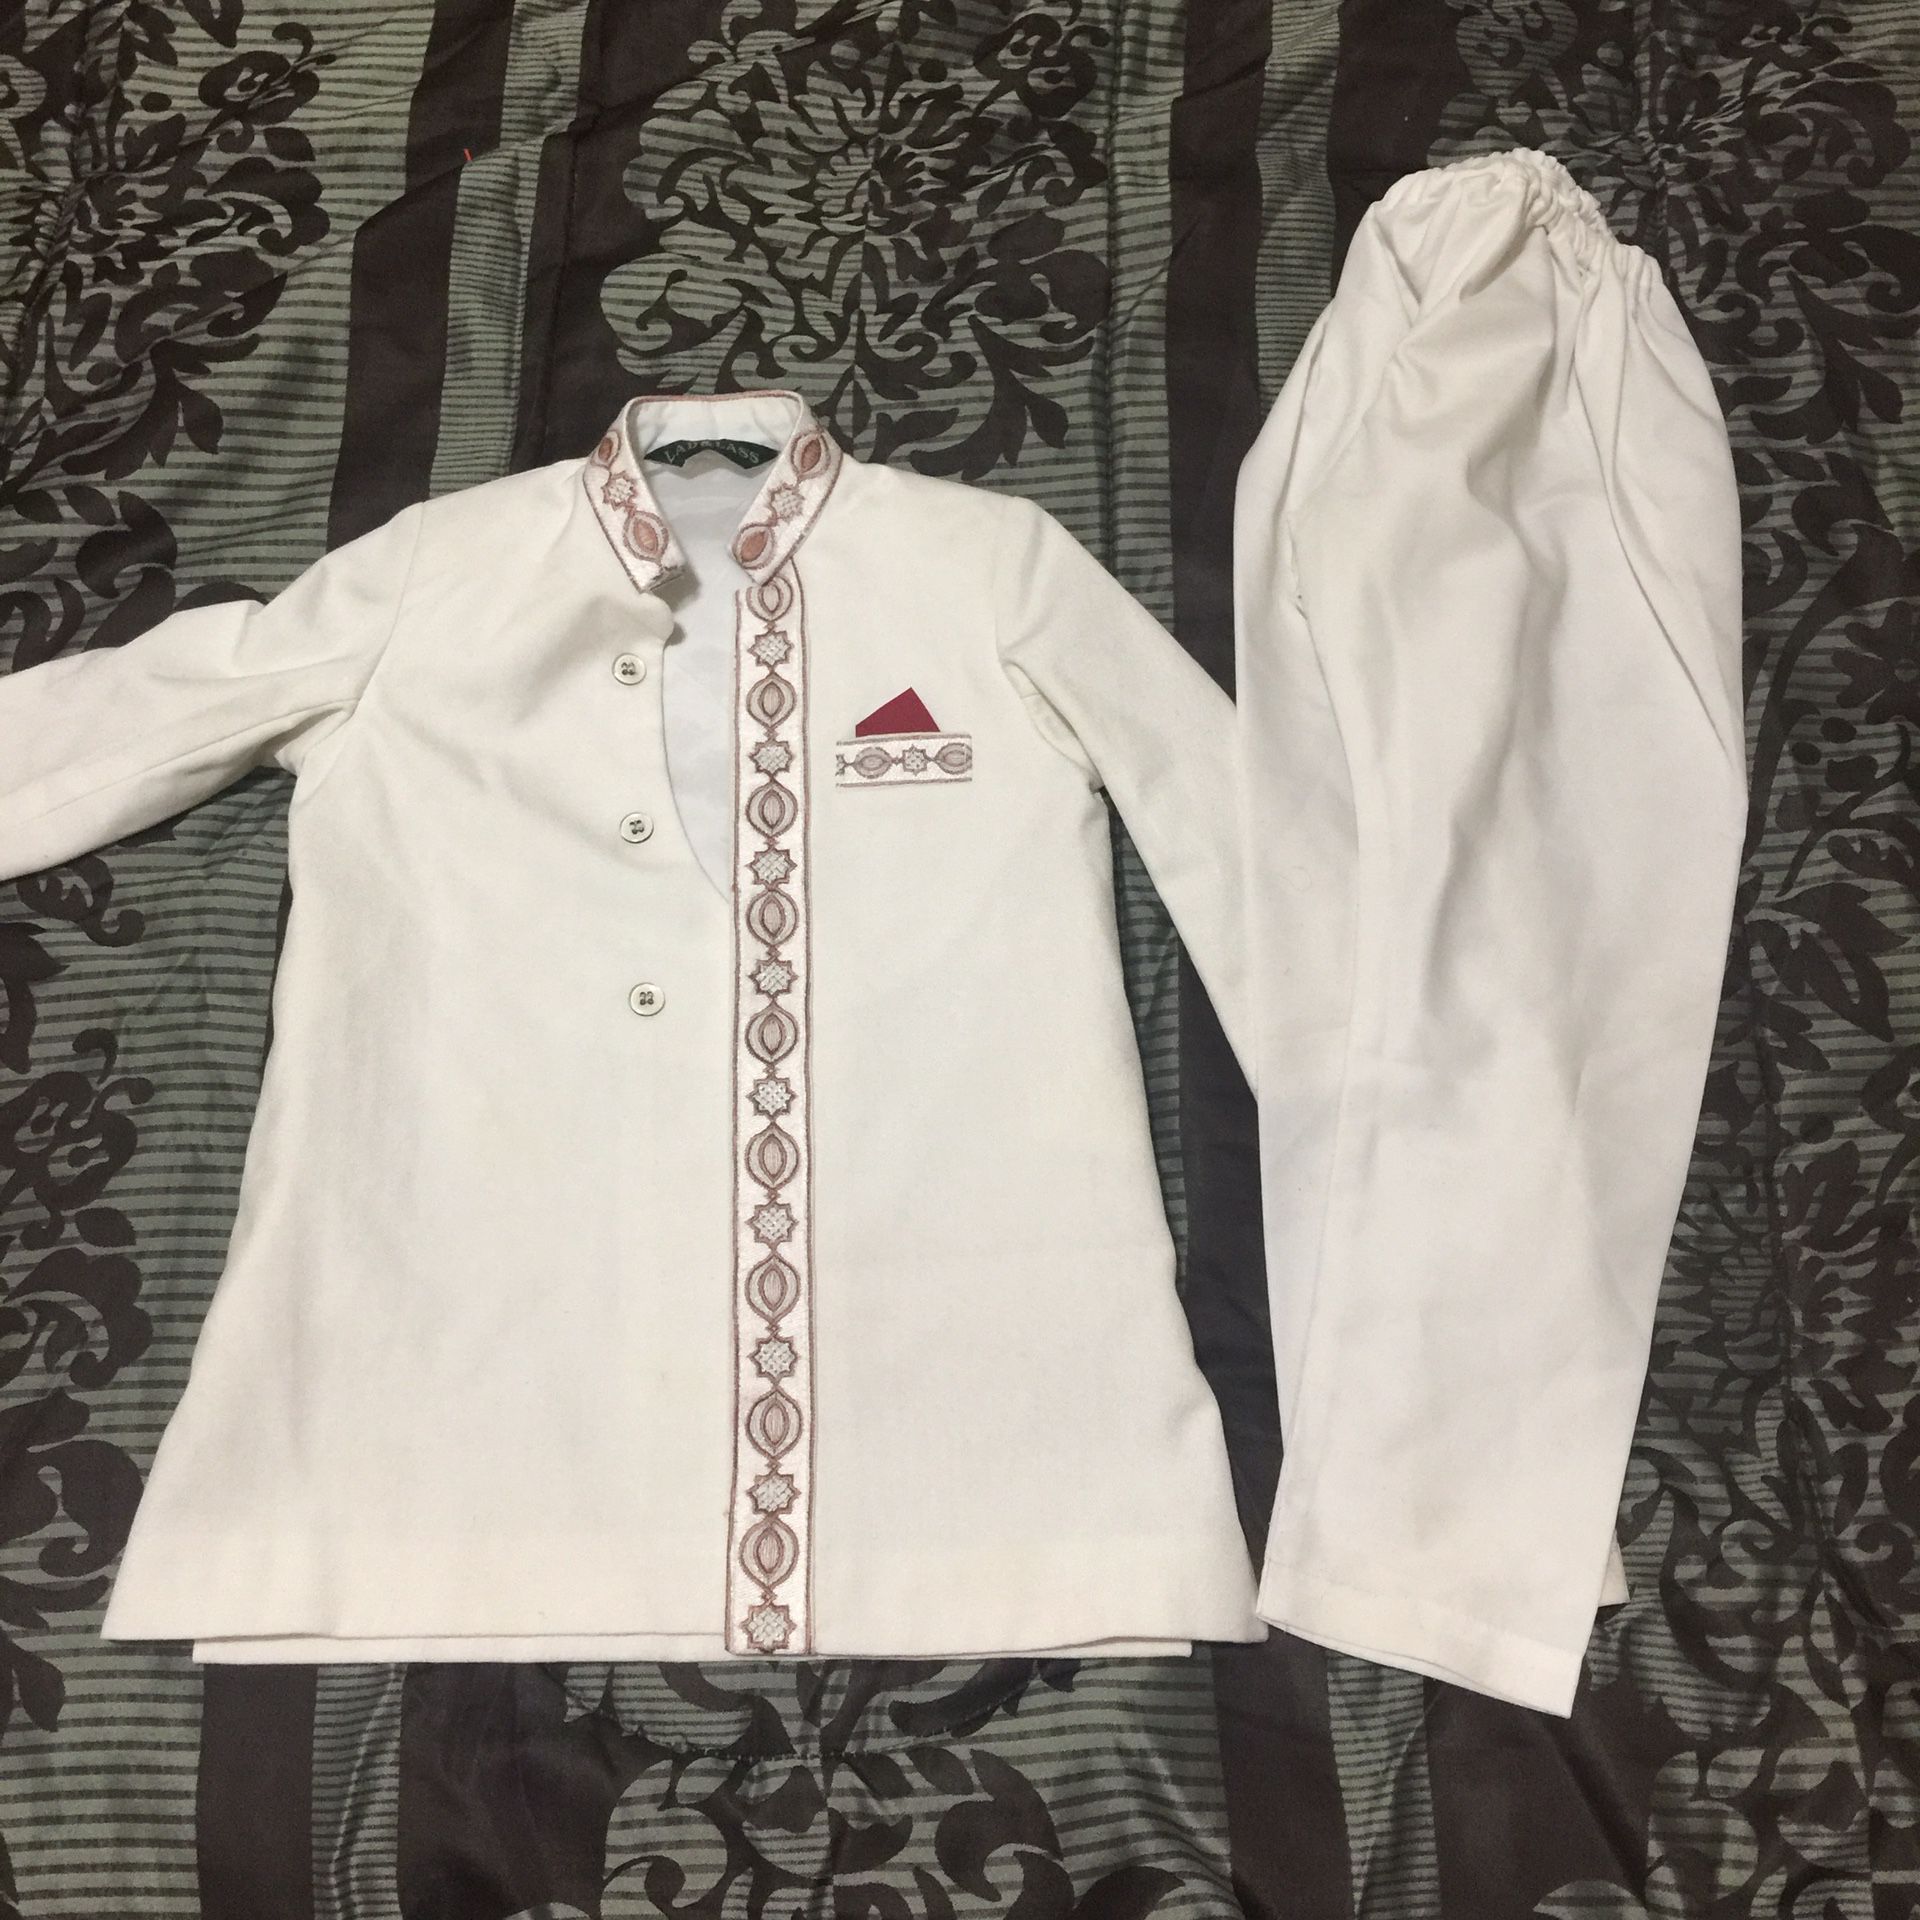 Kids Shalwar Kameez Outfit Dress eid white fancy formal dress boys toddlers